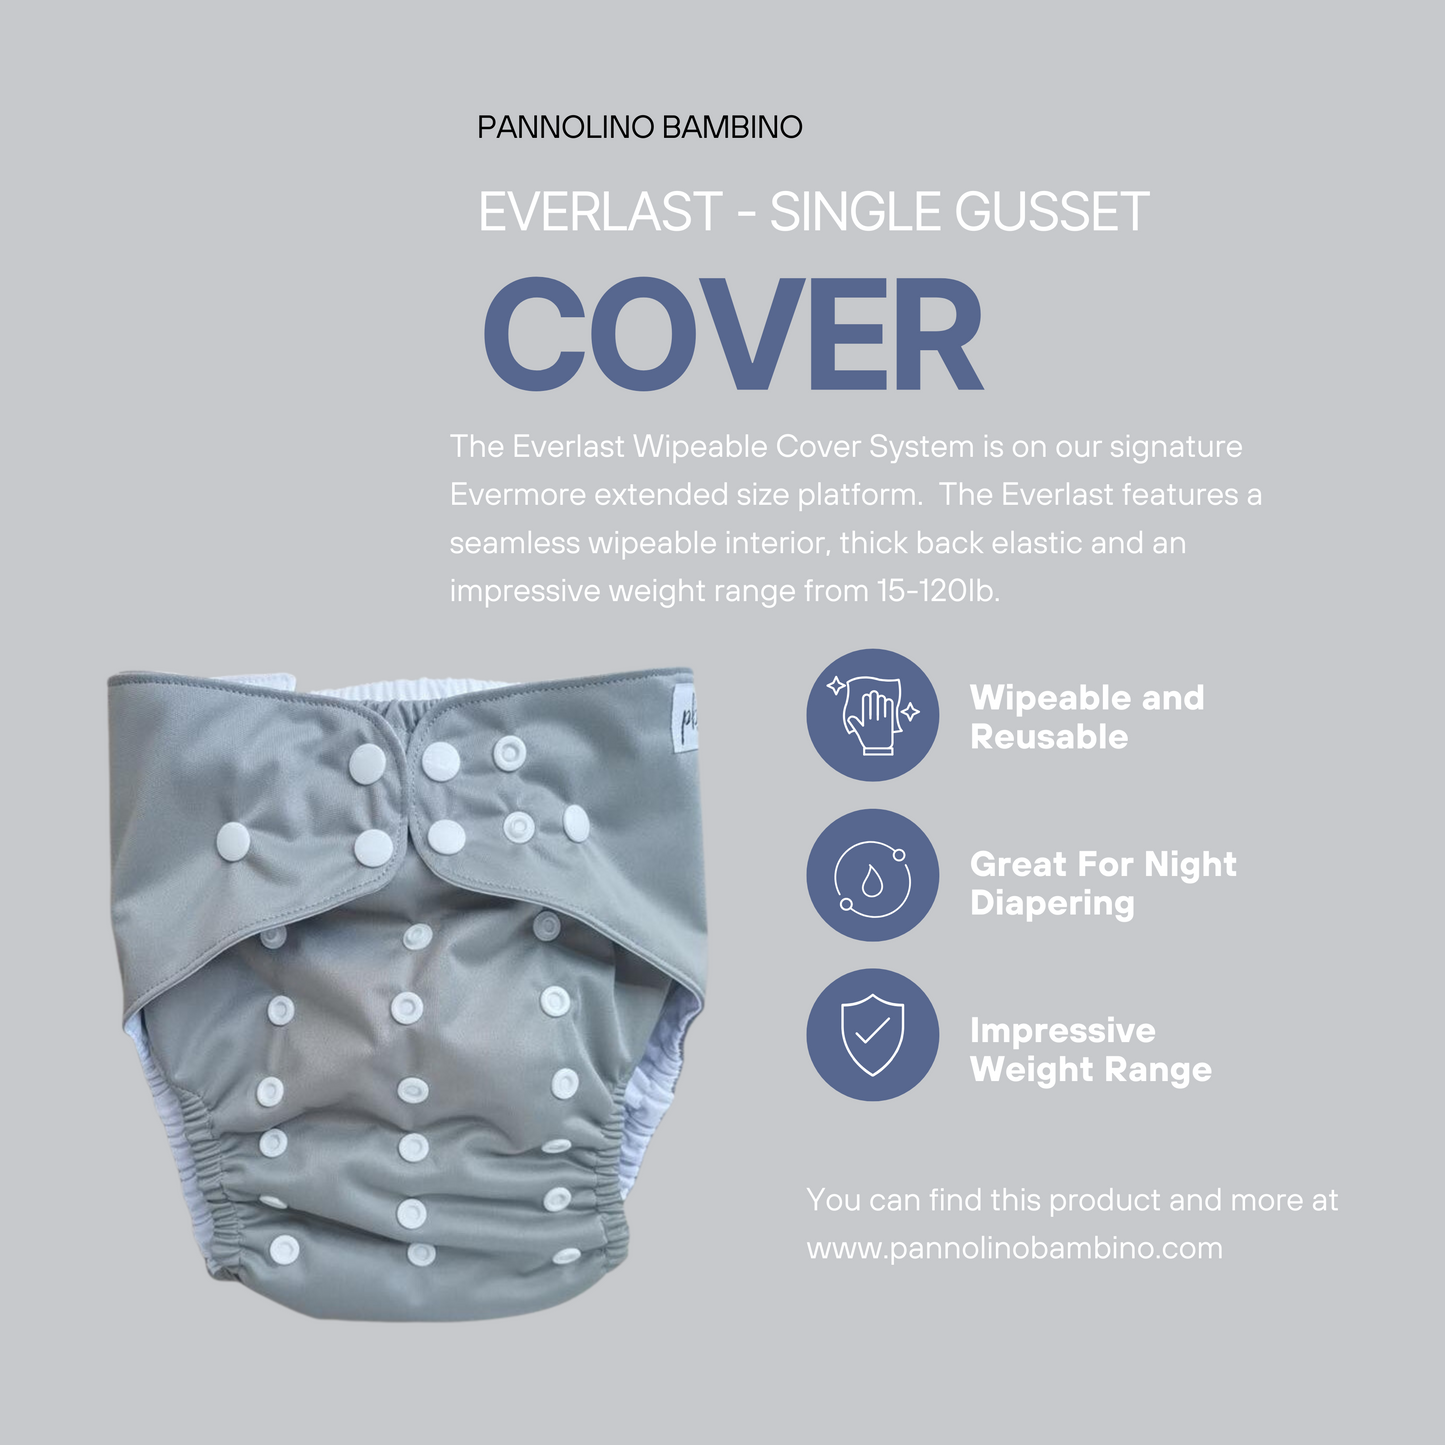 Everlast Wipeable Cover System - Autumn Crocus